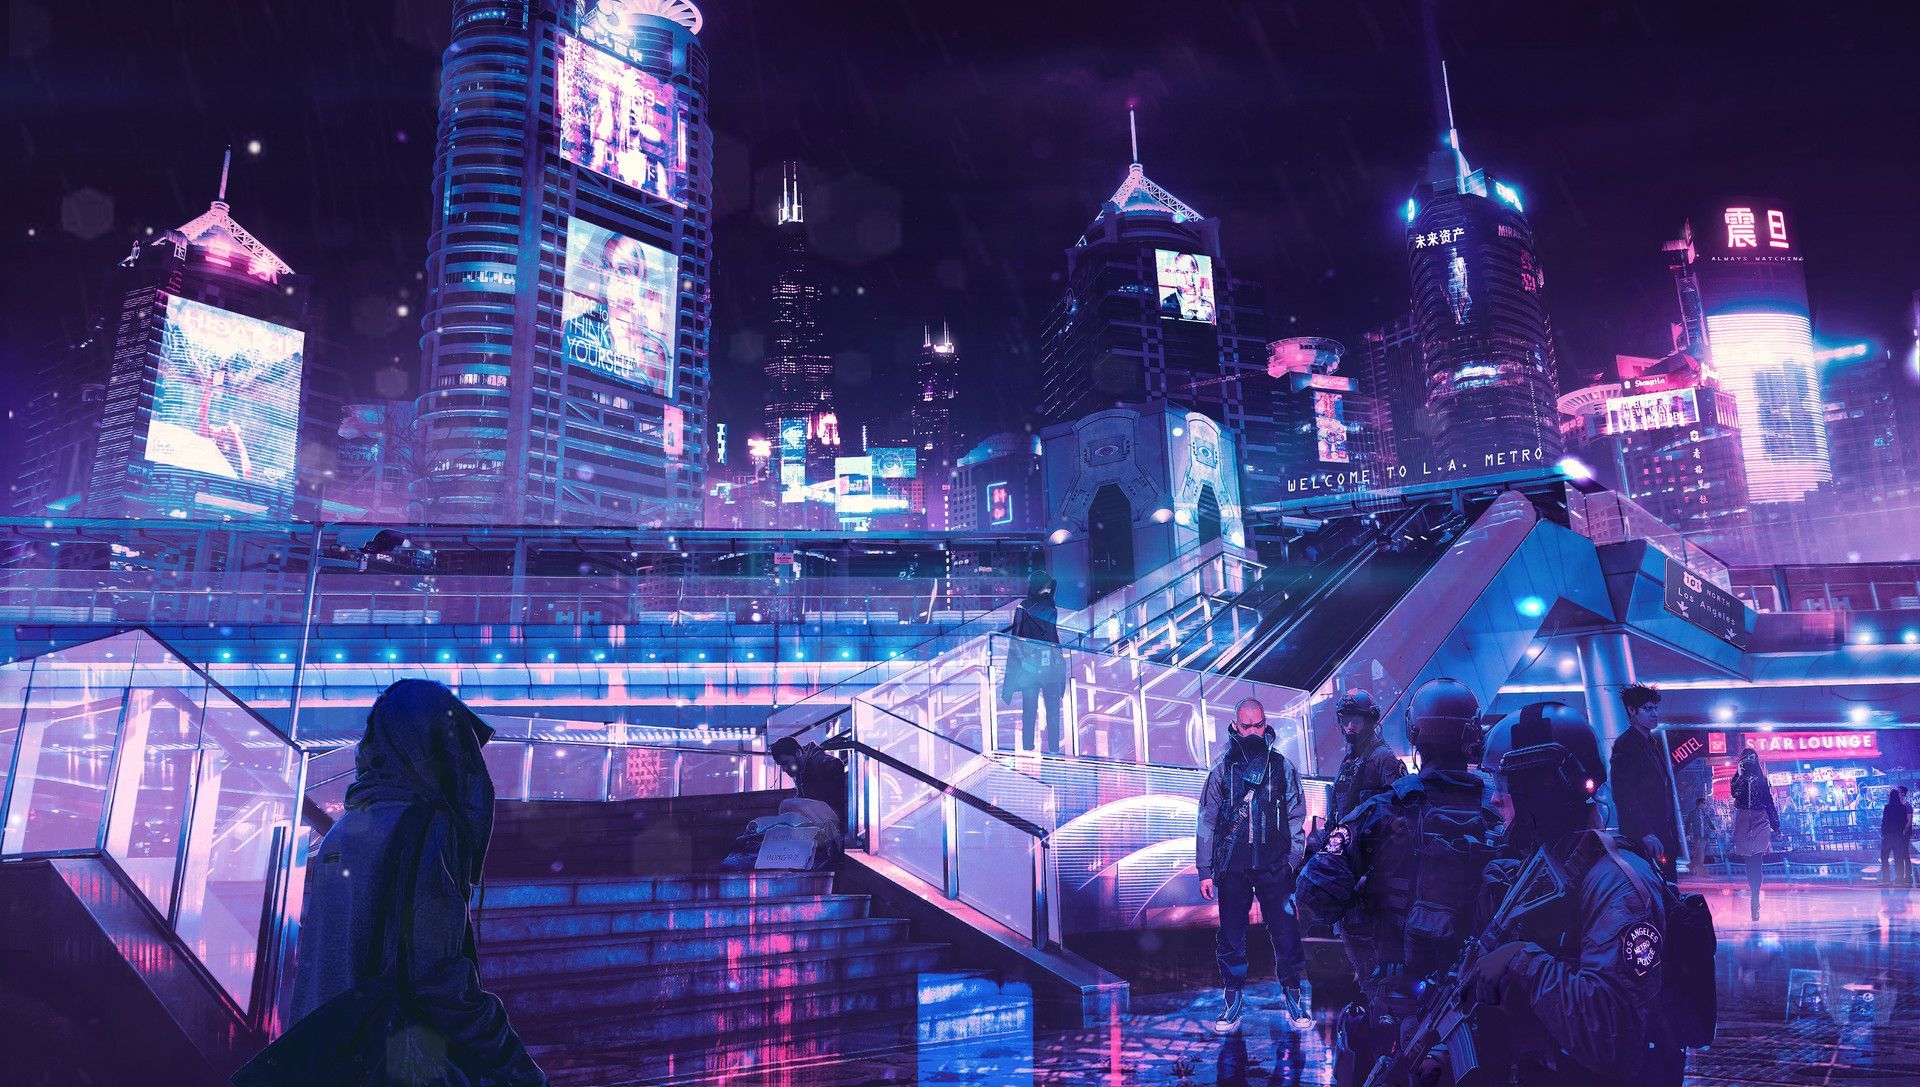 Wallpaper 1920x568 city night, neon lights - City, Cyberpunk, anime city